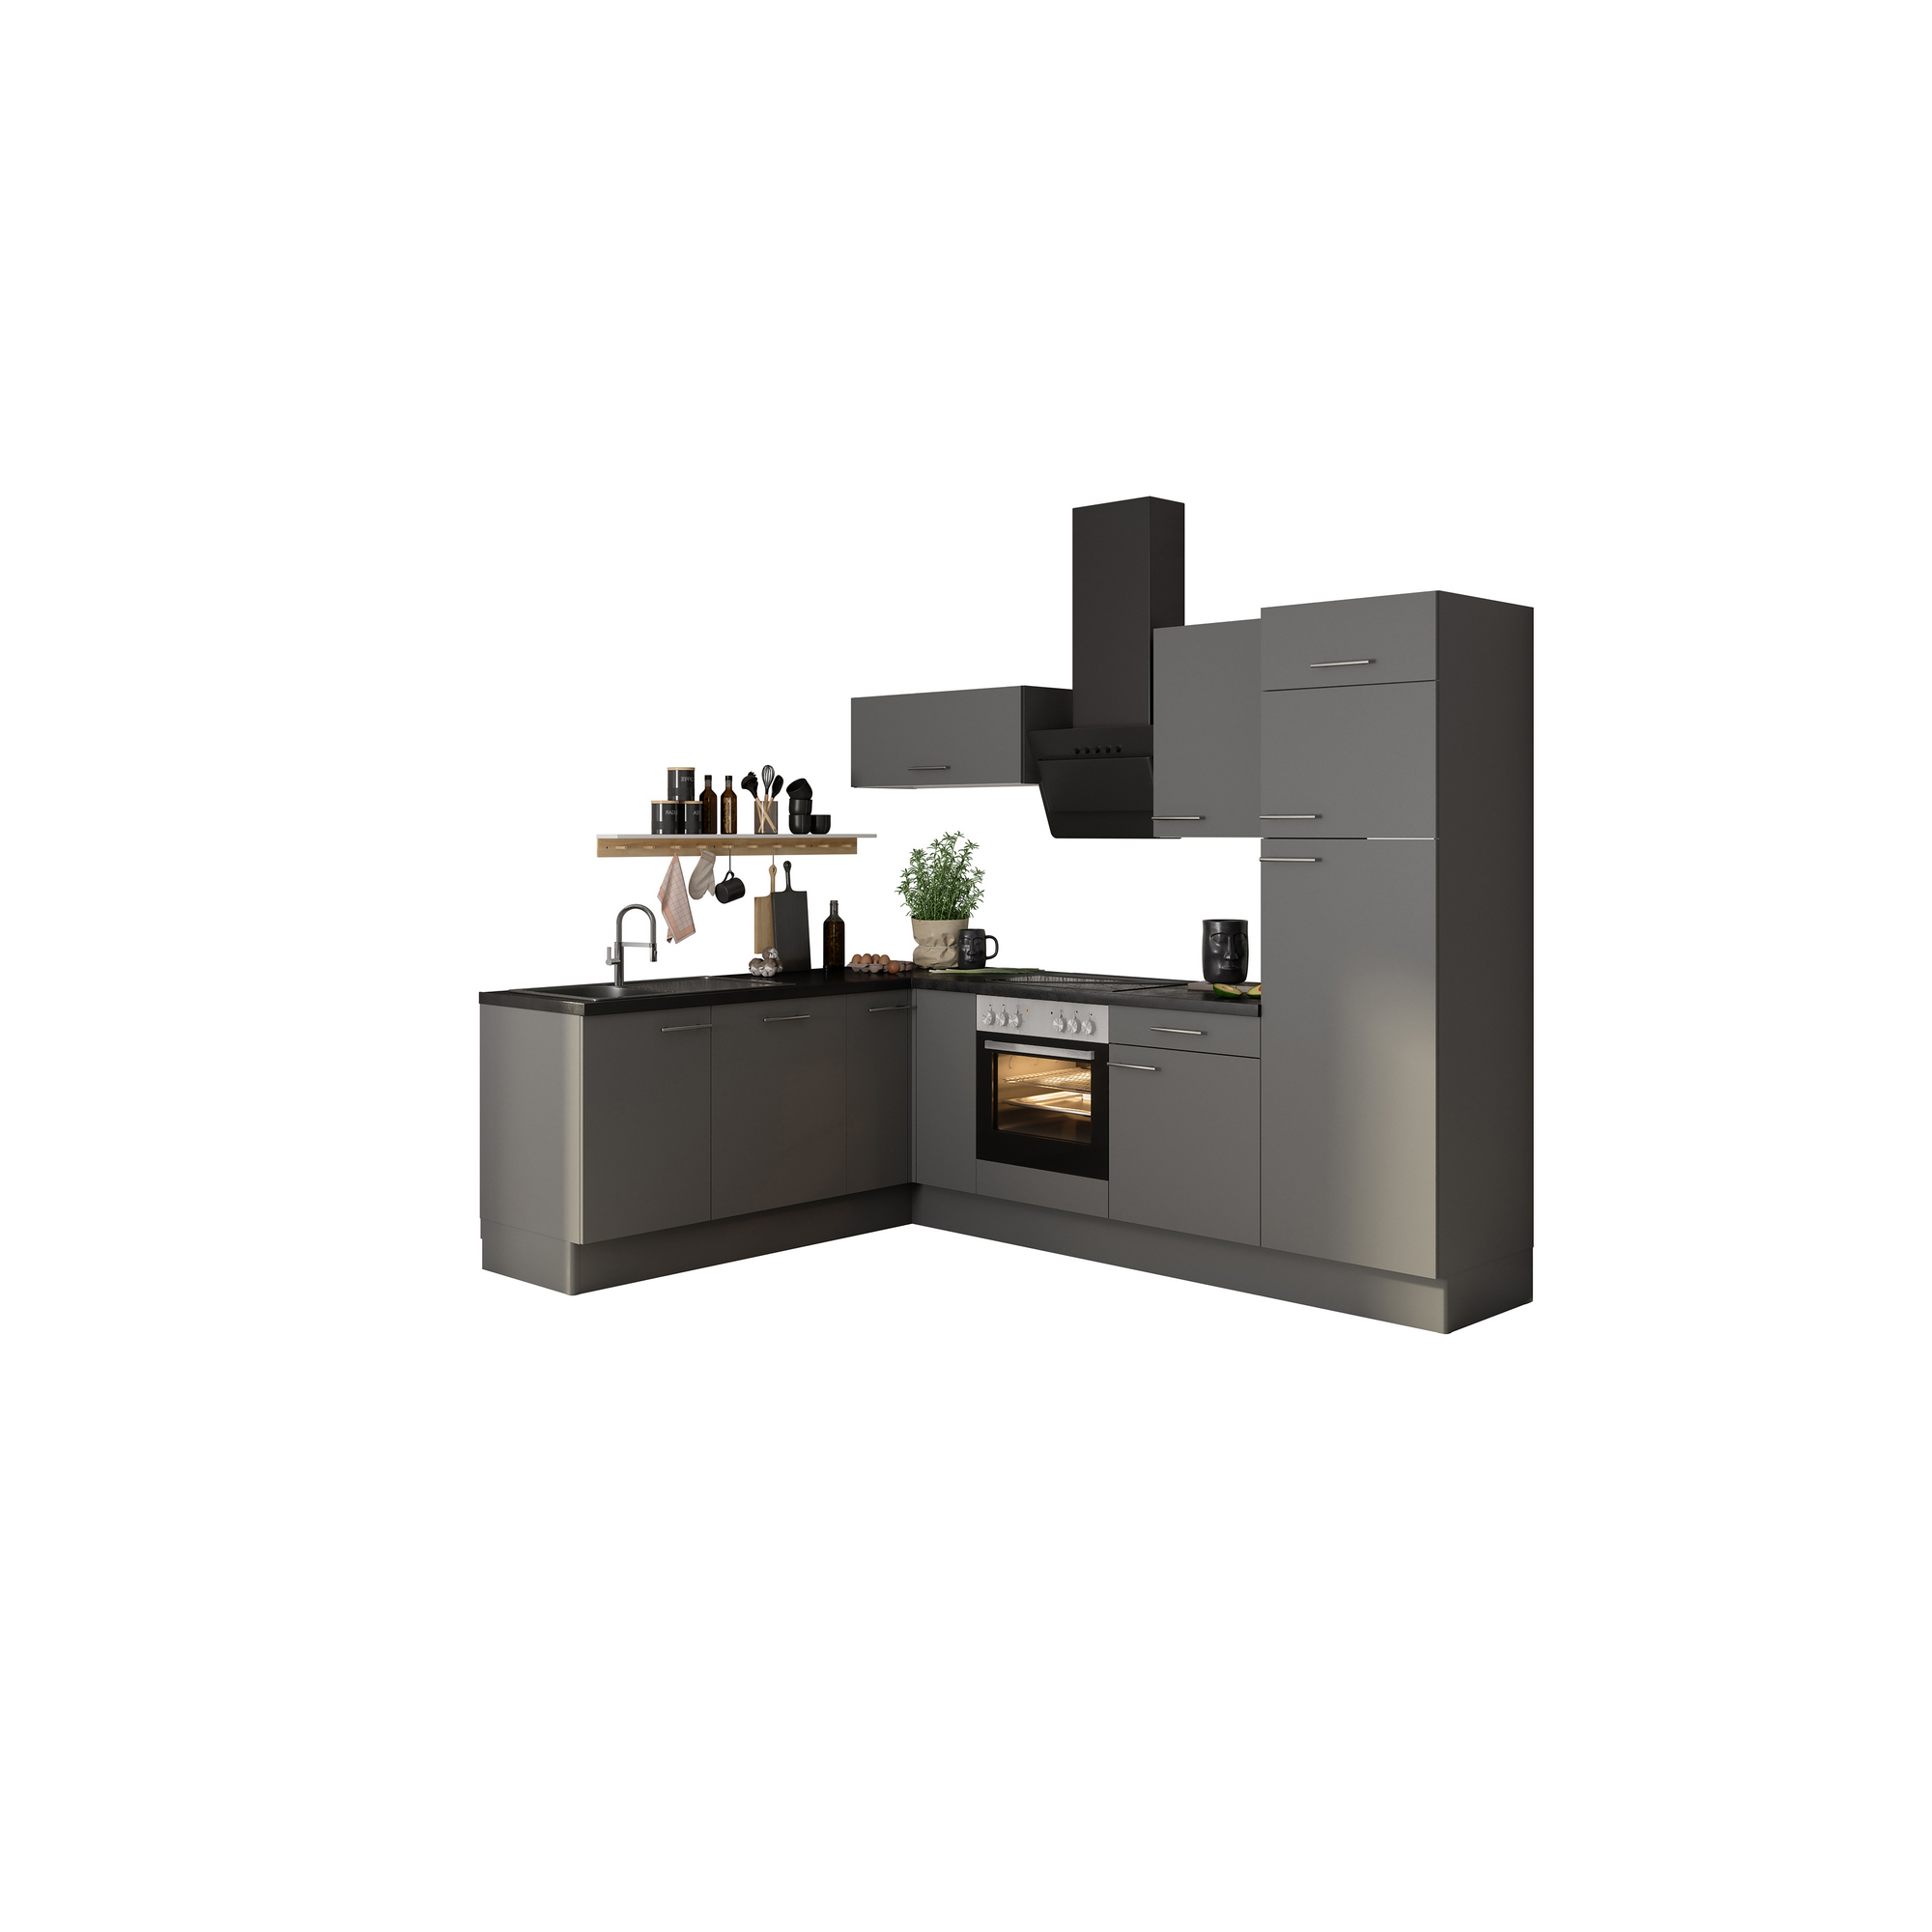 Winkelküche mit E-Geräten 'OPTIkoncept Mats825' grau 270 cm + product picture